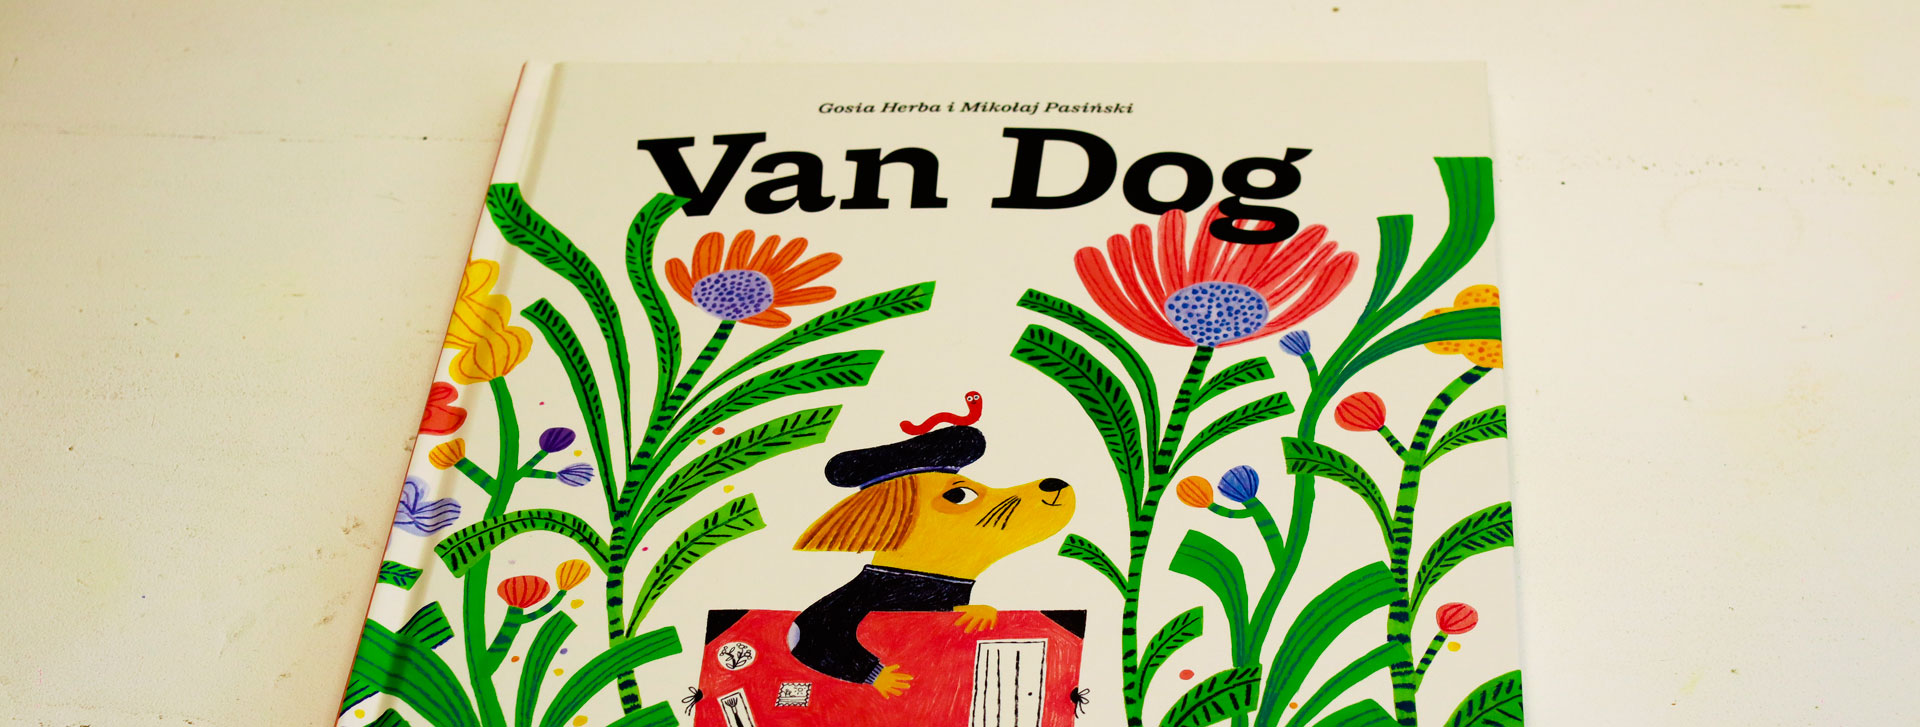 Van Dog – Gosia Herba